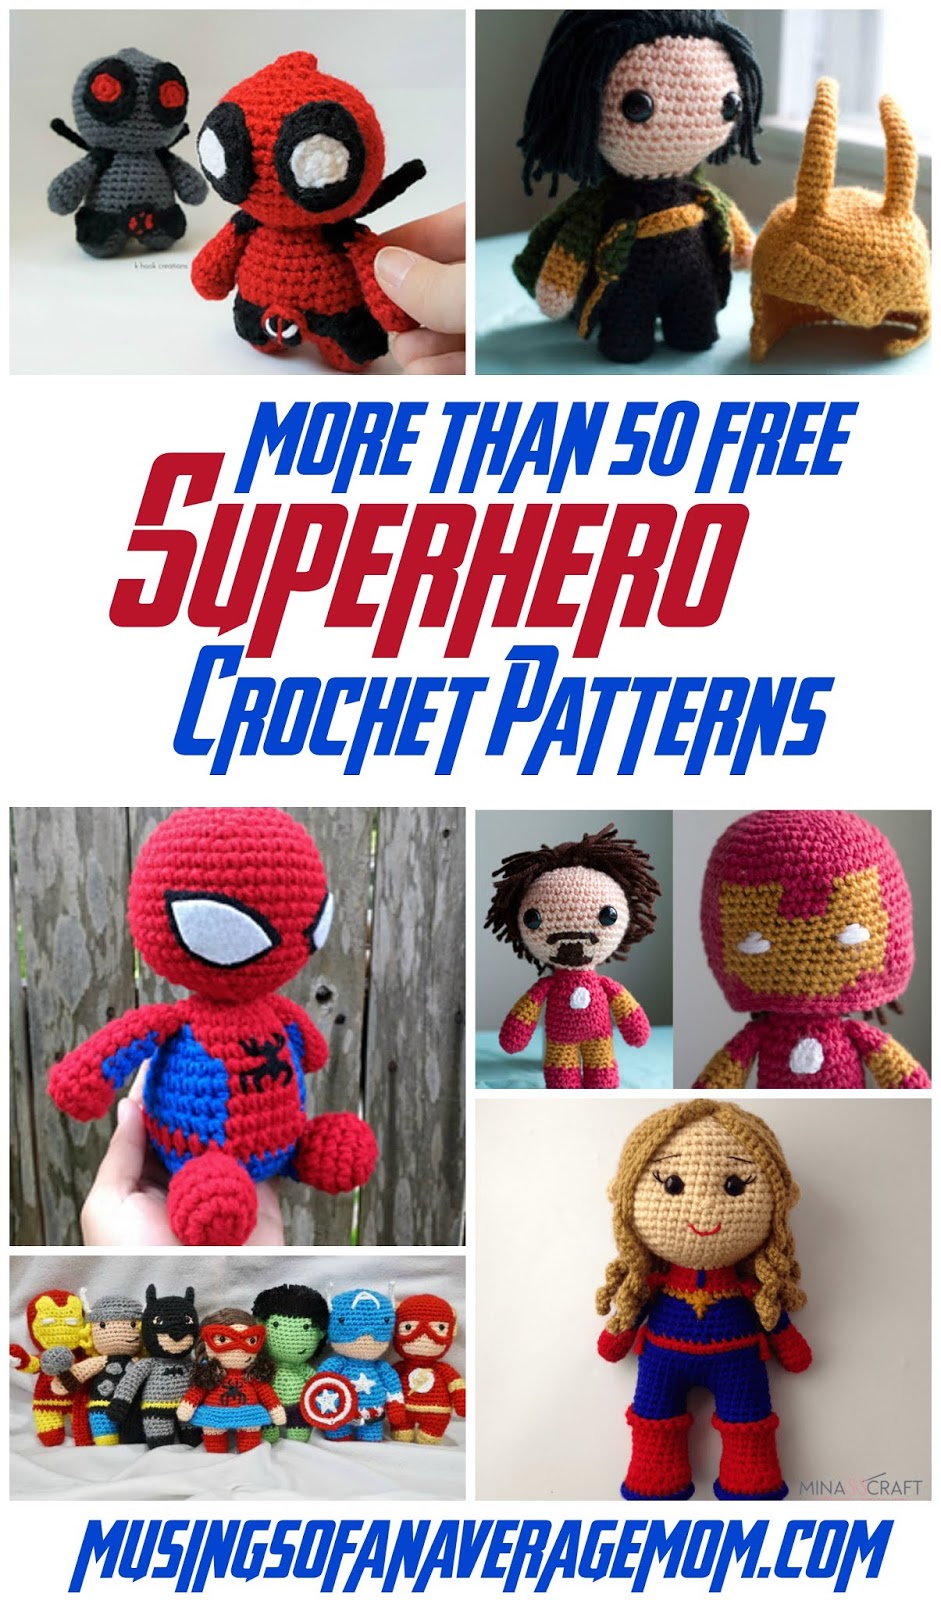 Musings of an Average Mom: Free Disney Movie Character Crochet